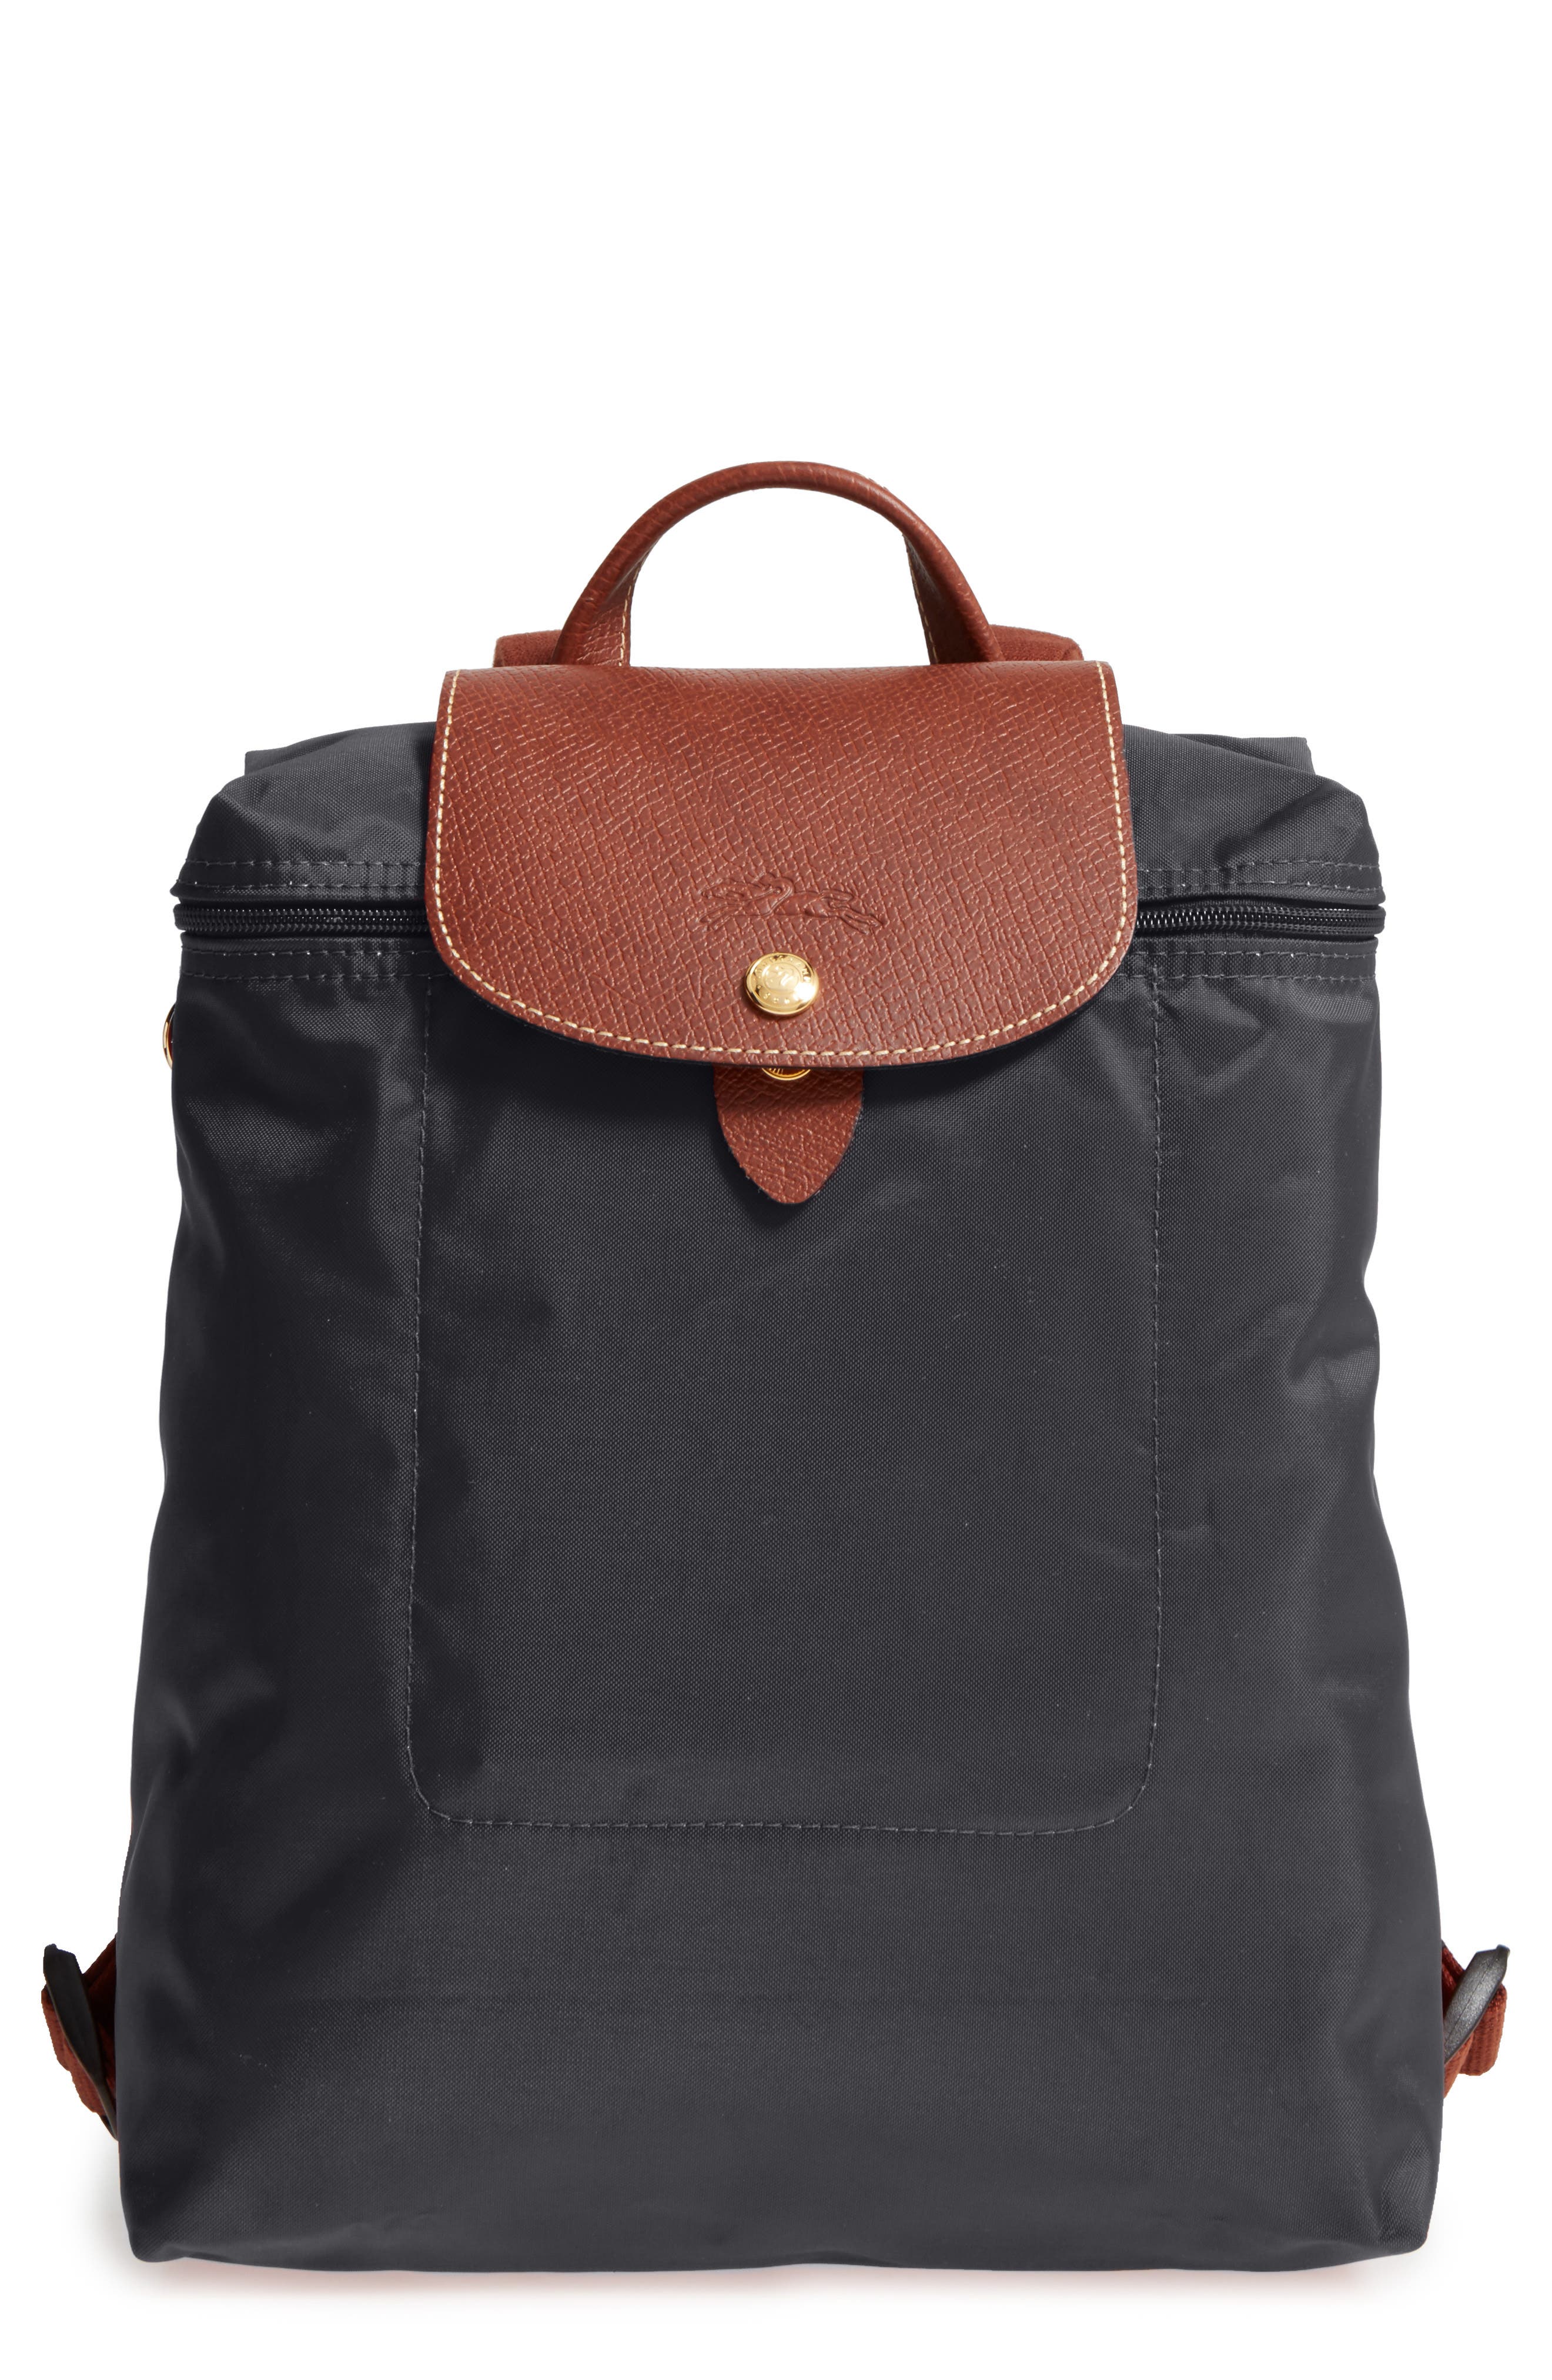 longchamp backpack